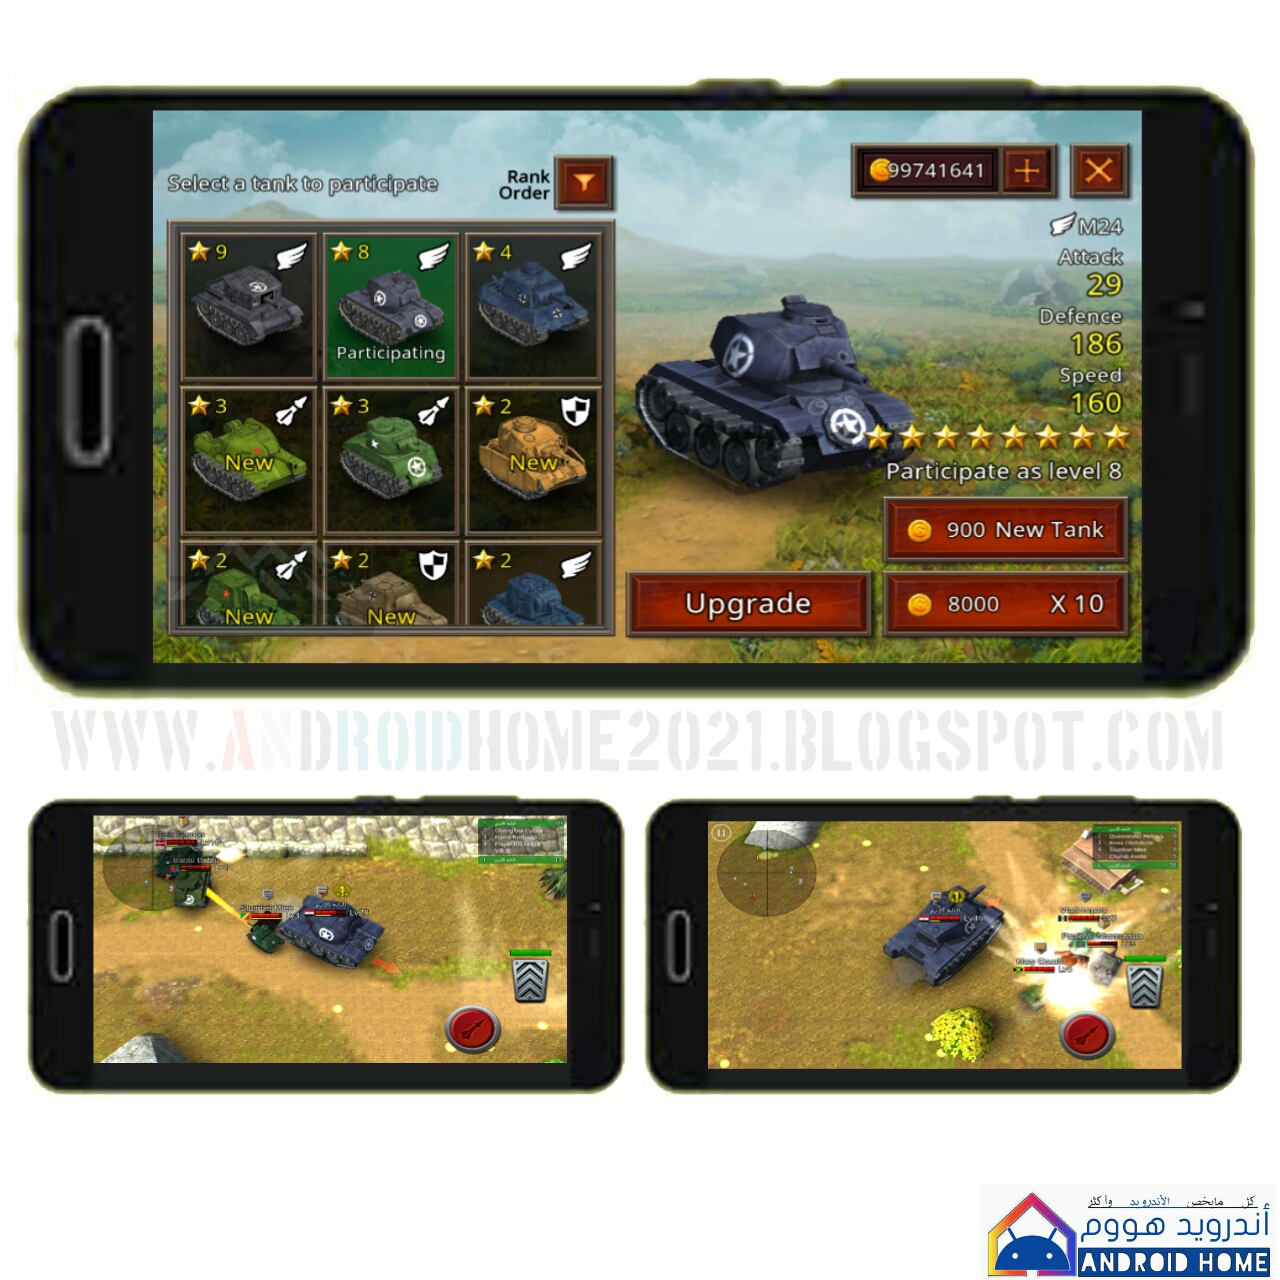 Download Battle Tank Game Apk